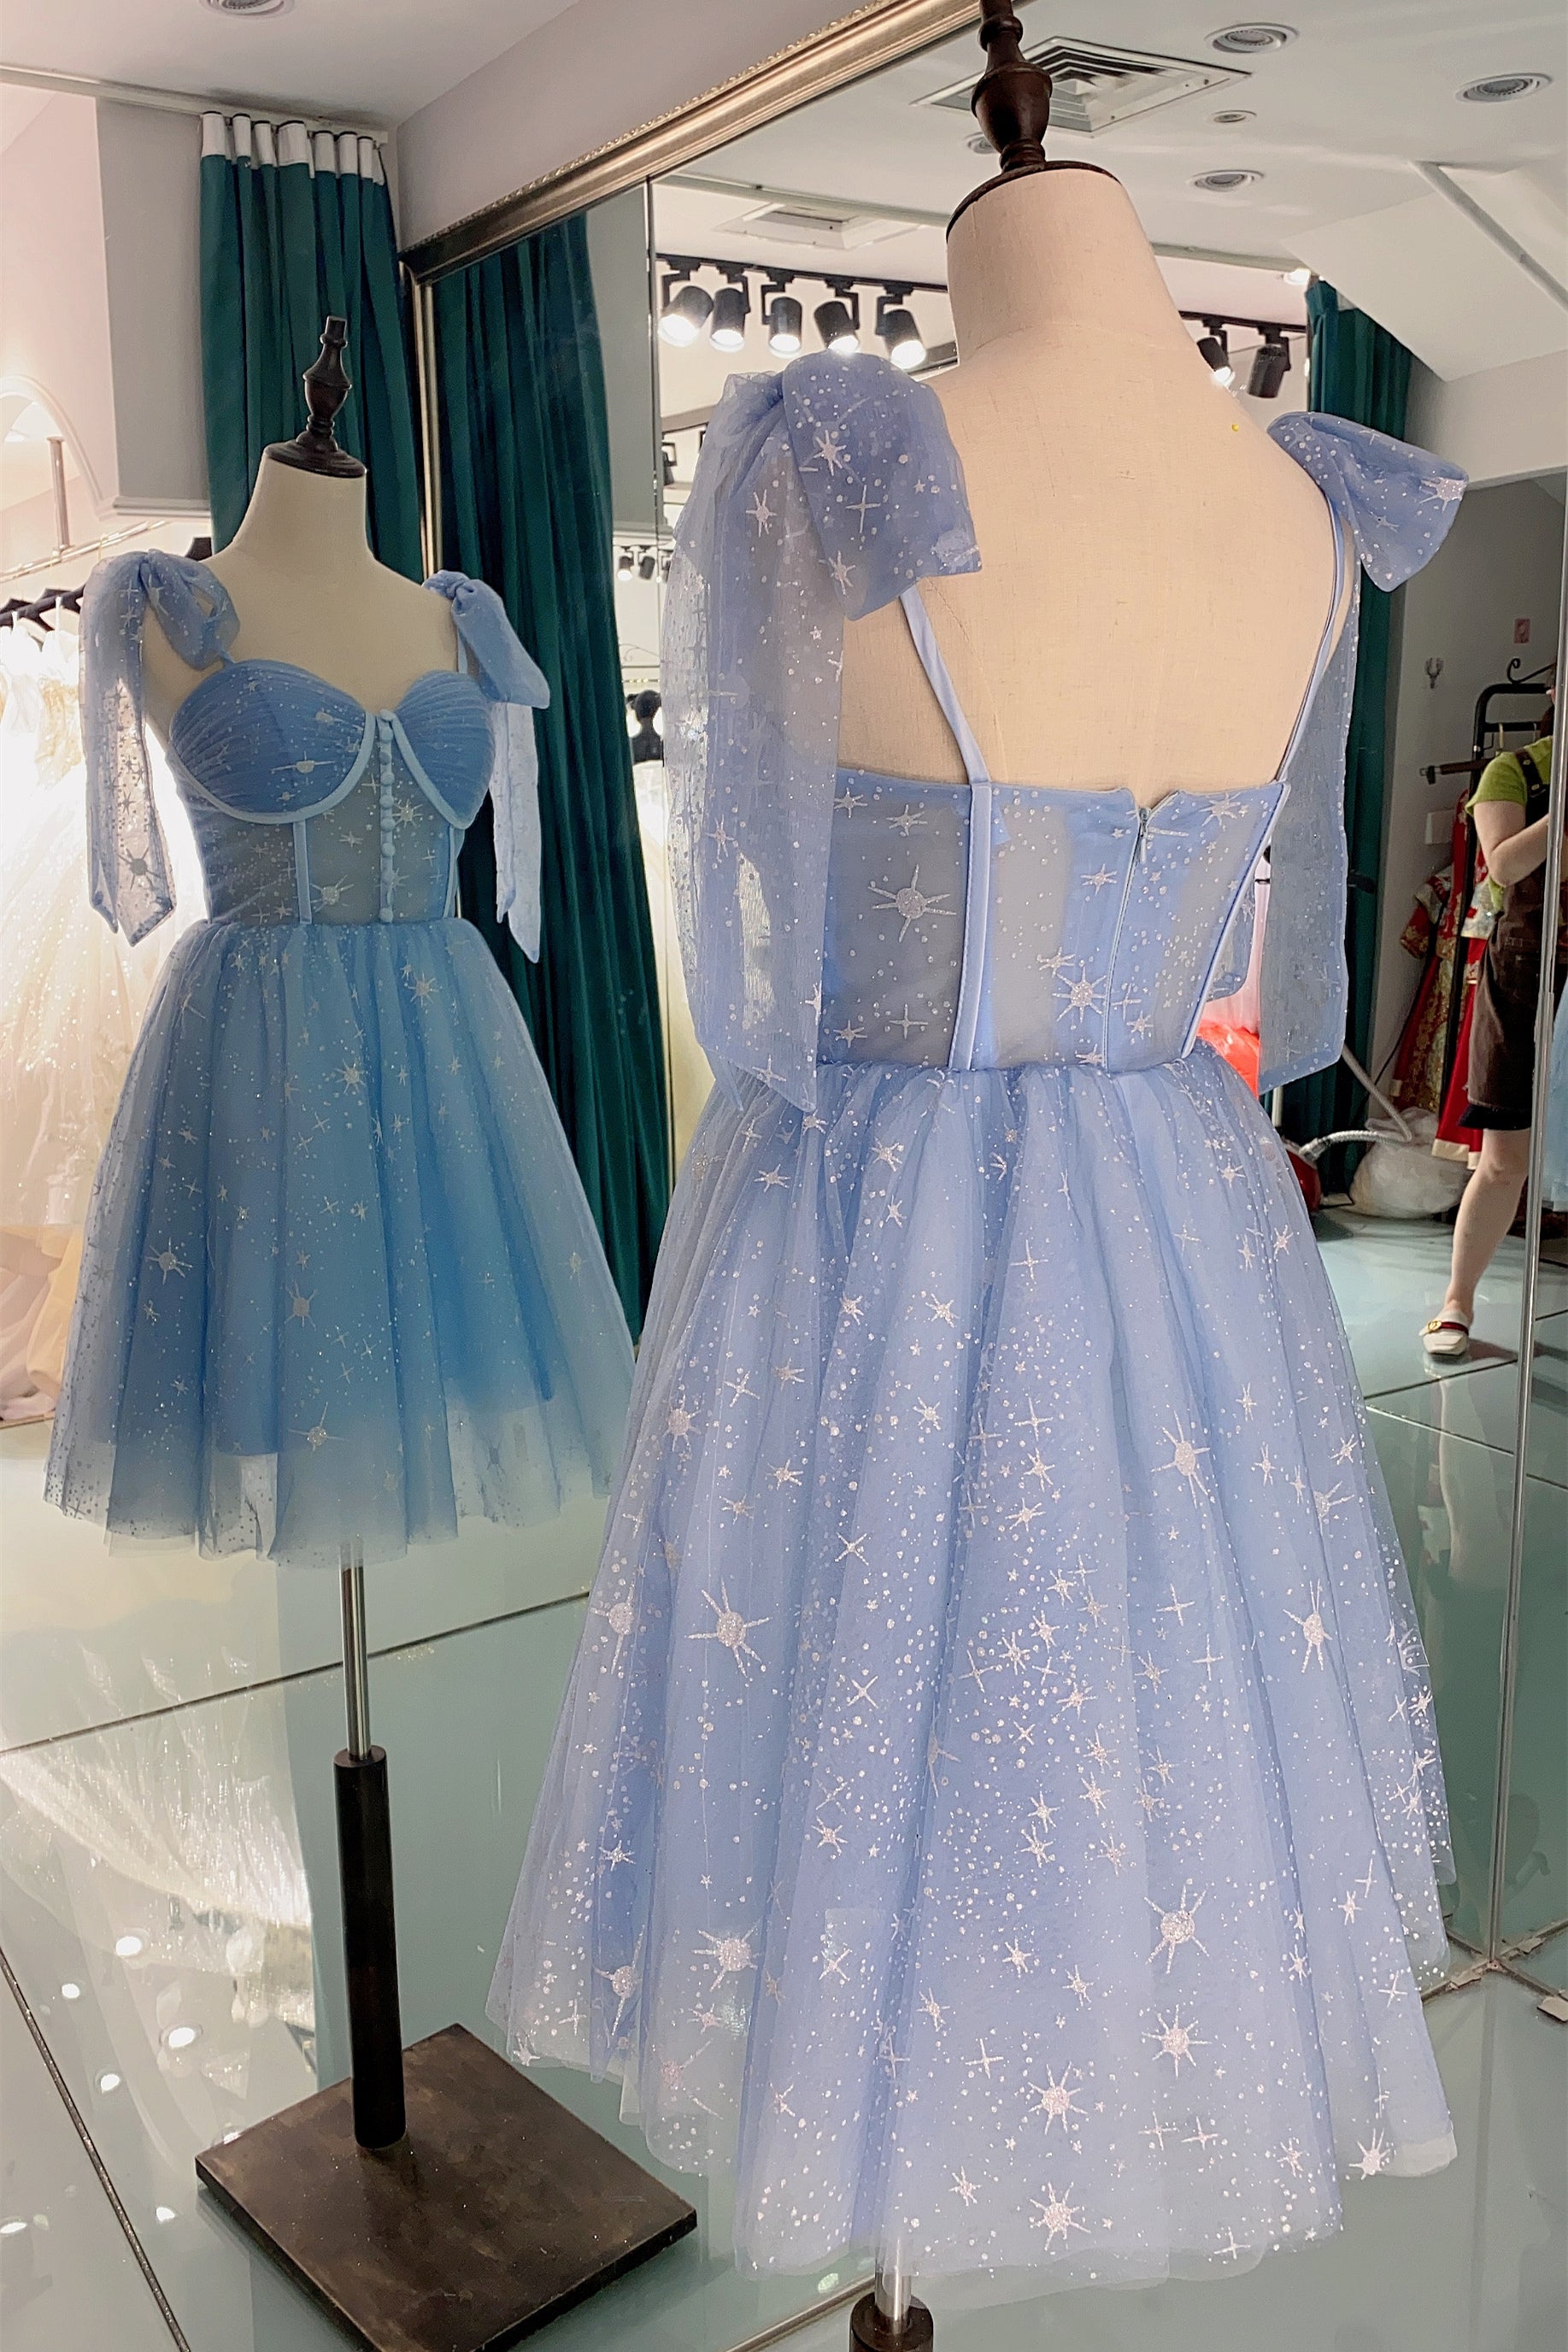 Raven Daria Sky Blue Sequin Tulle Cute Midi Dresses, Short Prom Dresses, Homecoming Dresses, HD001